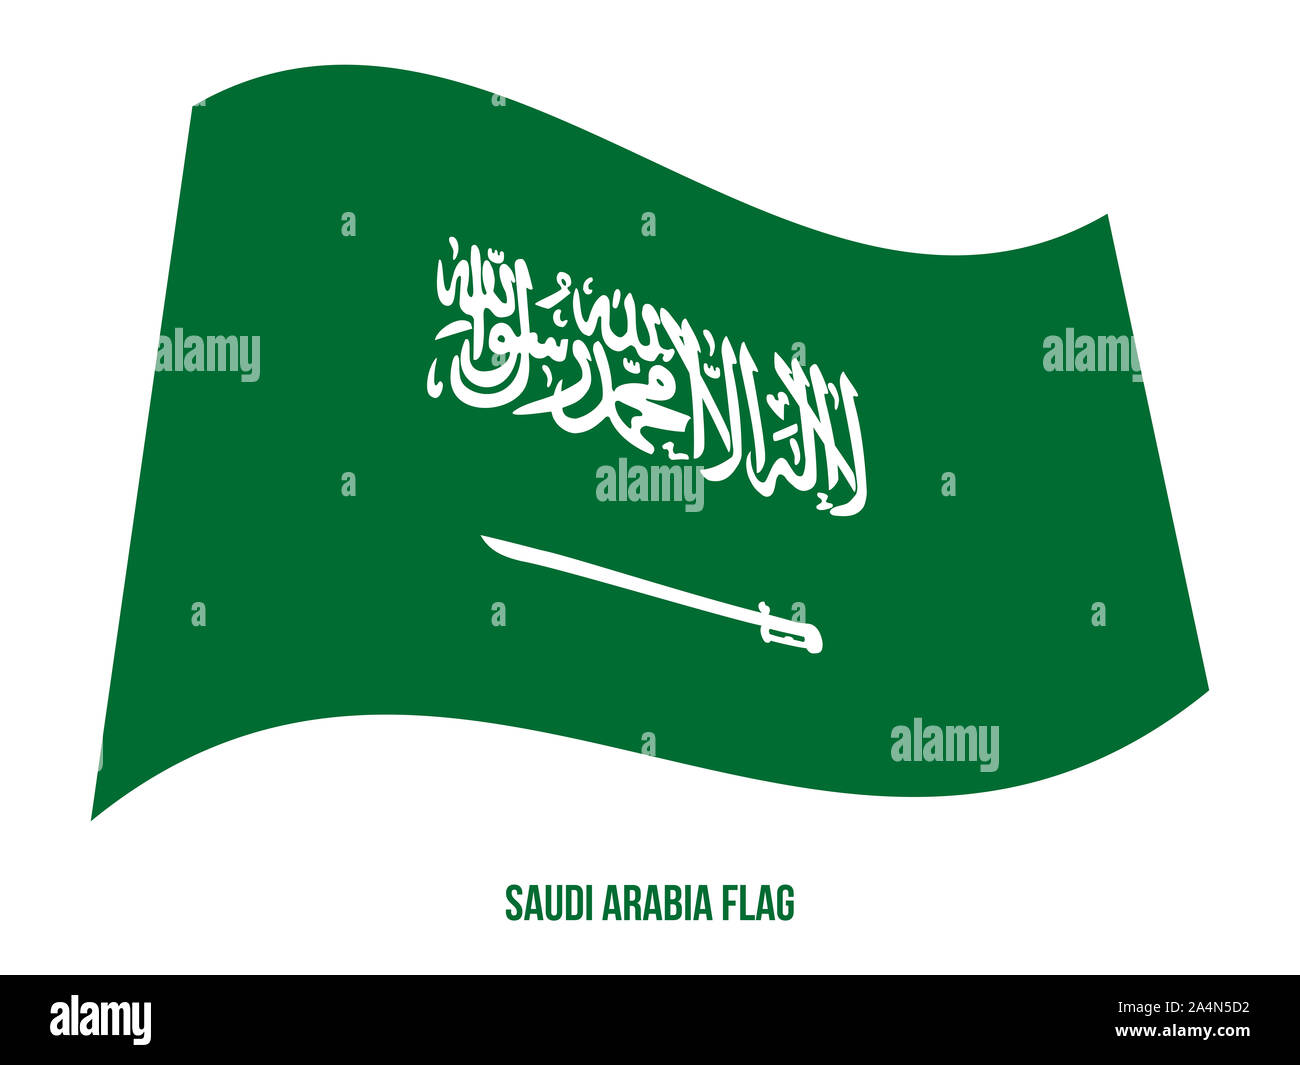 Saudi Arabia Flag Waving Vector Illustration on White Background. Saudi Arabia National Flag. Stock Photo